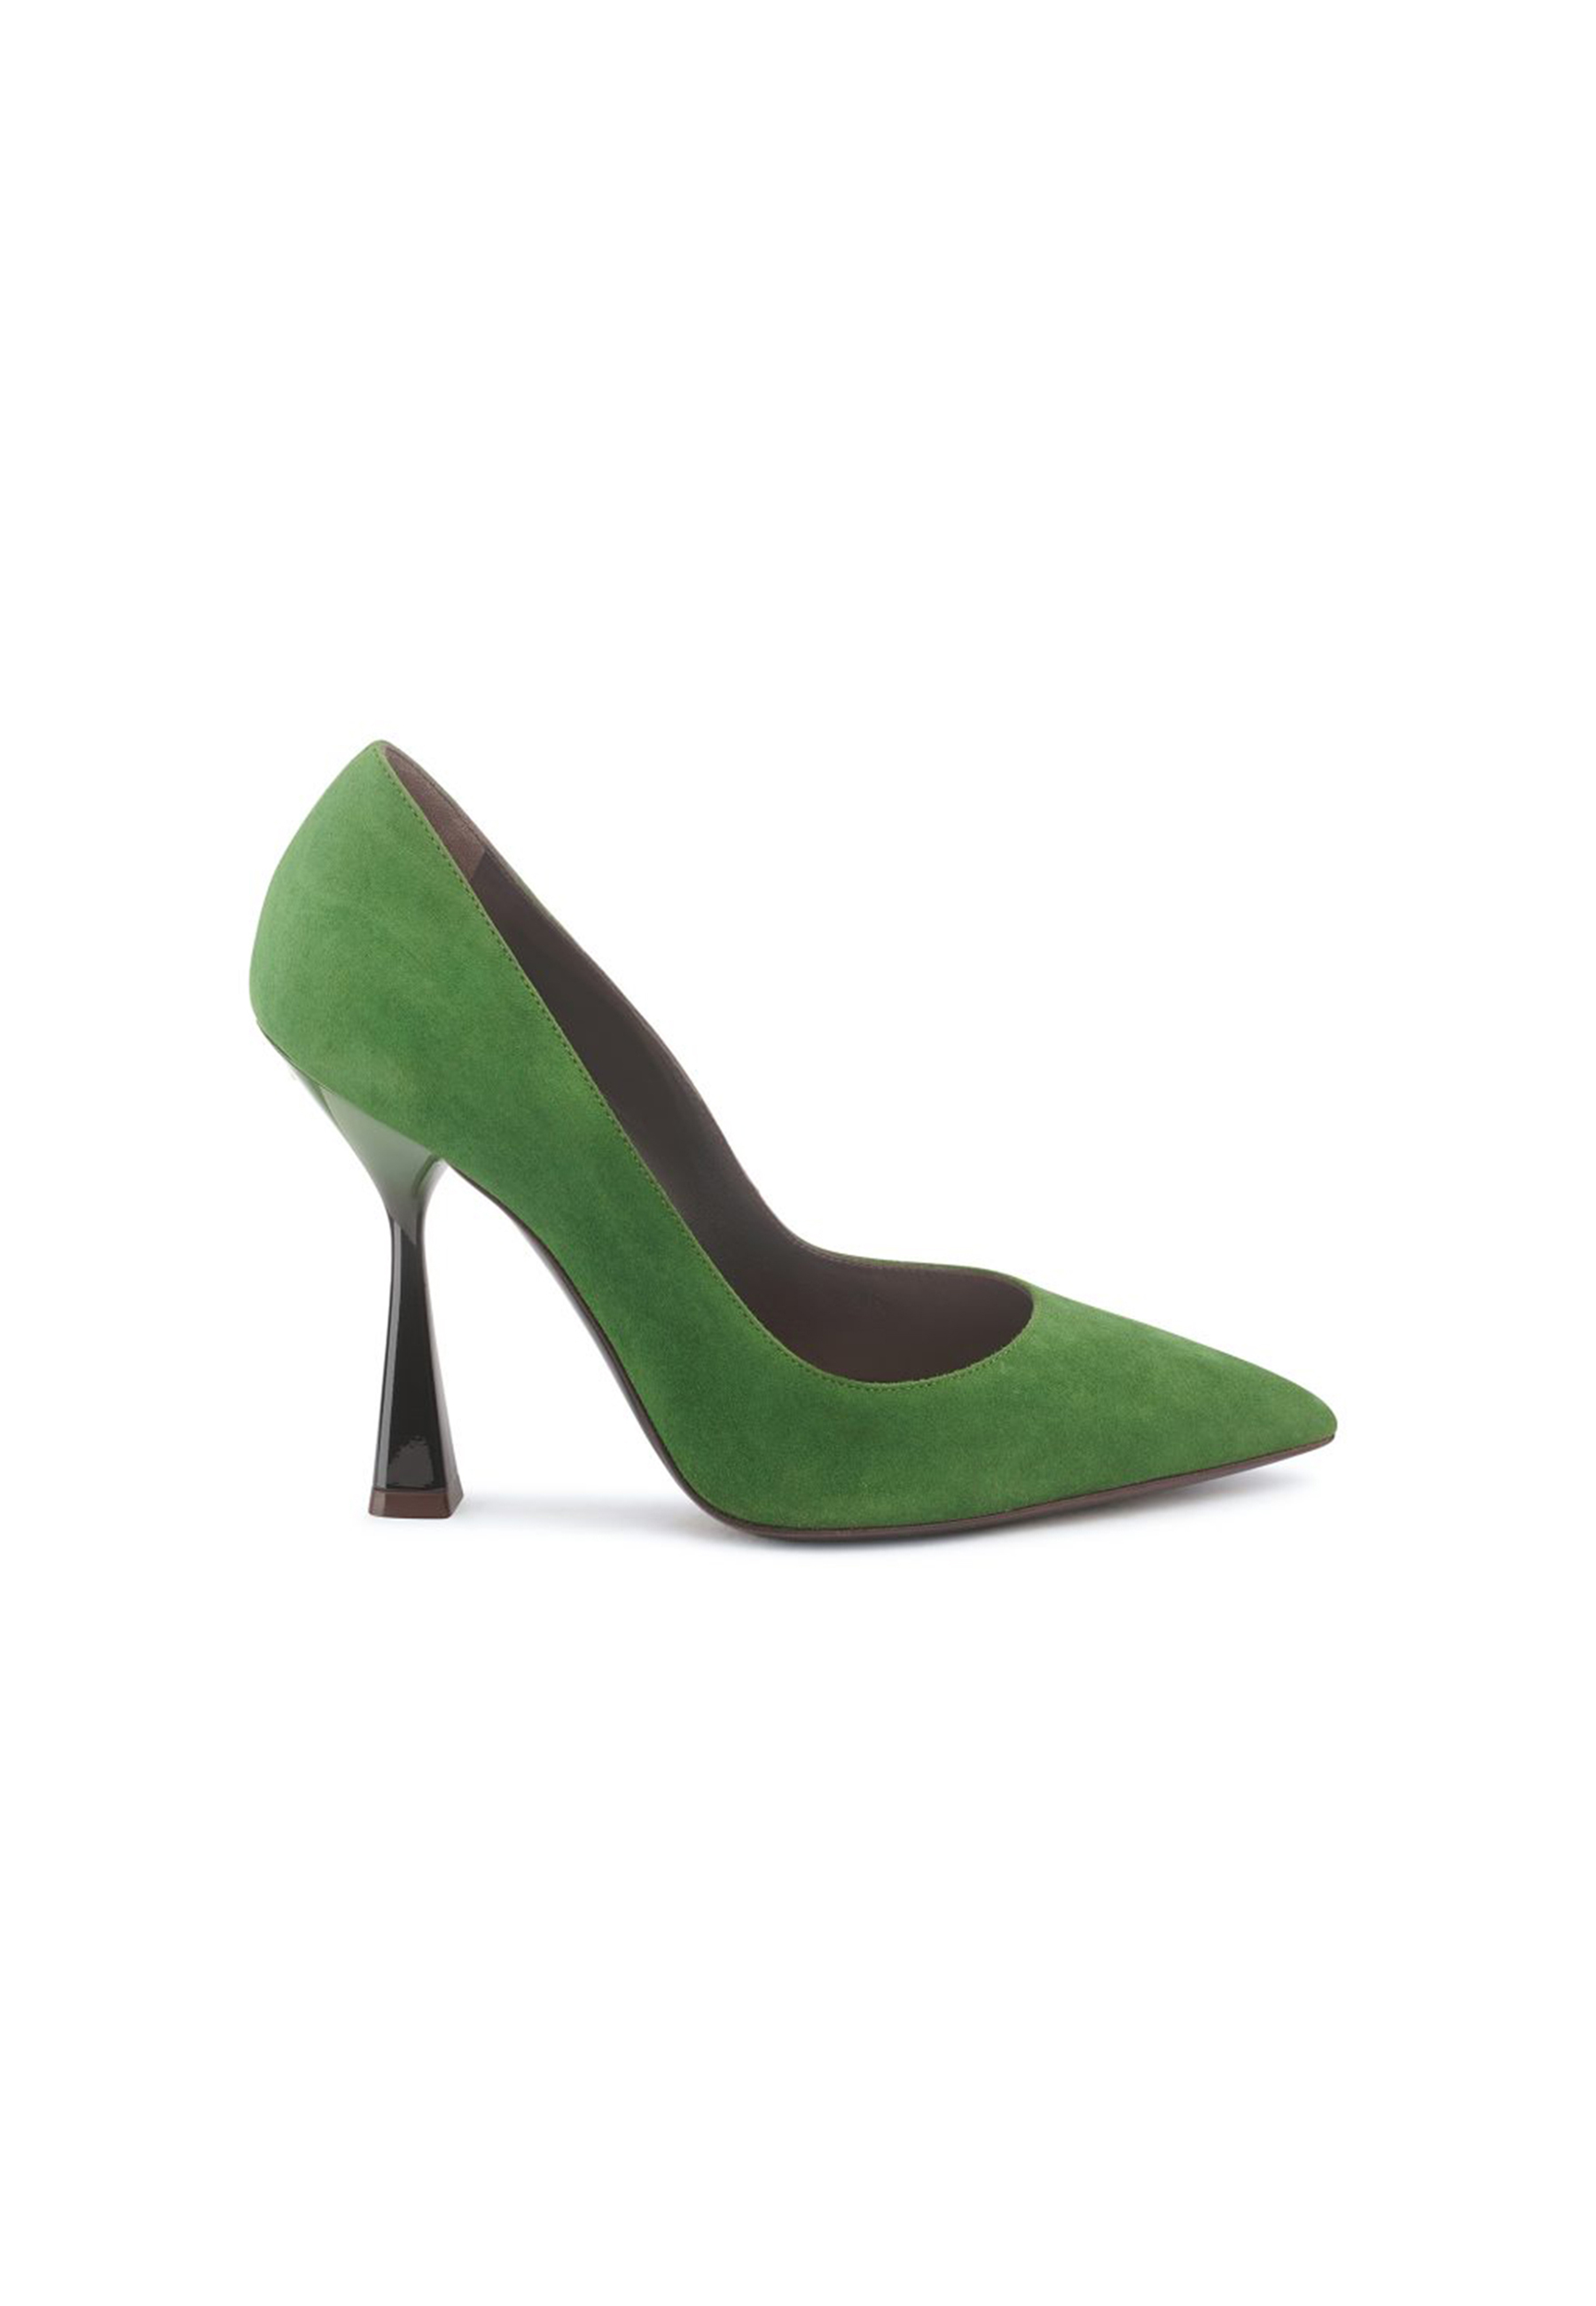 Le Flagship Store Experience – Green Stilettos